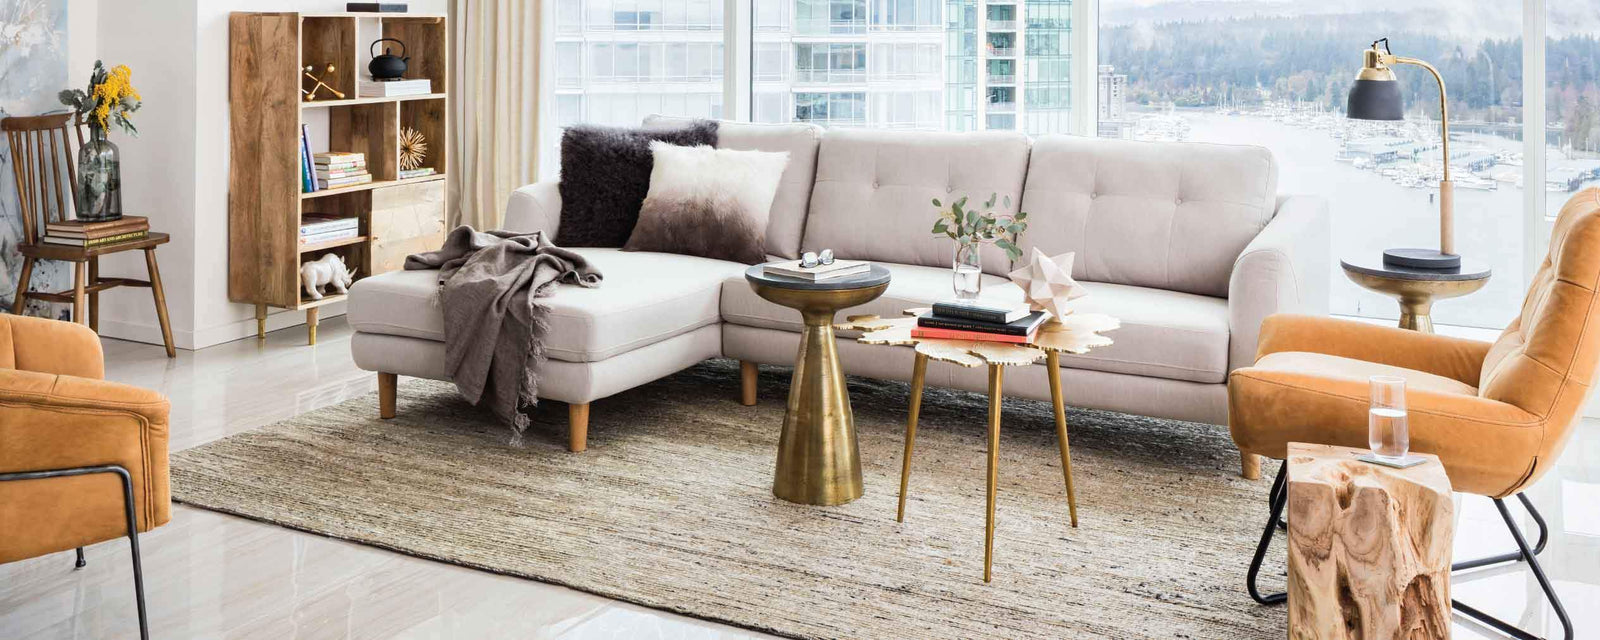 mid entury modern living room